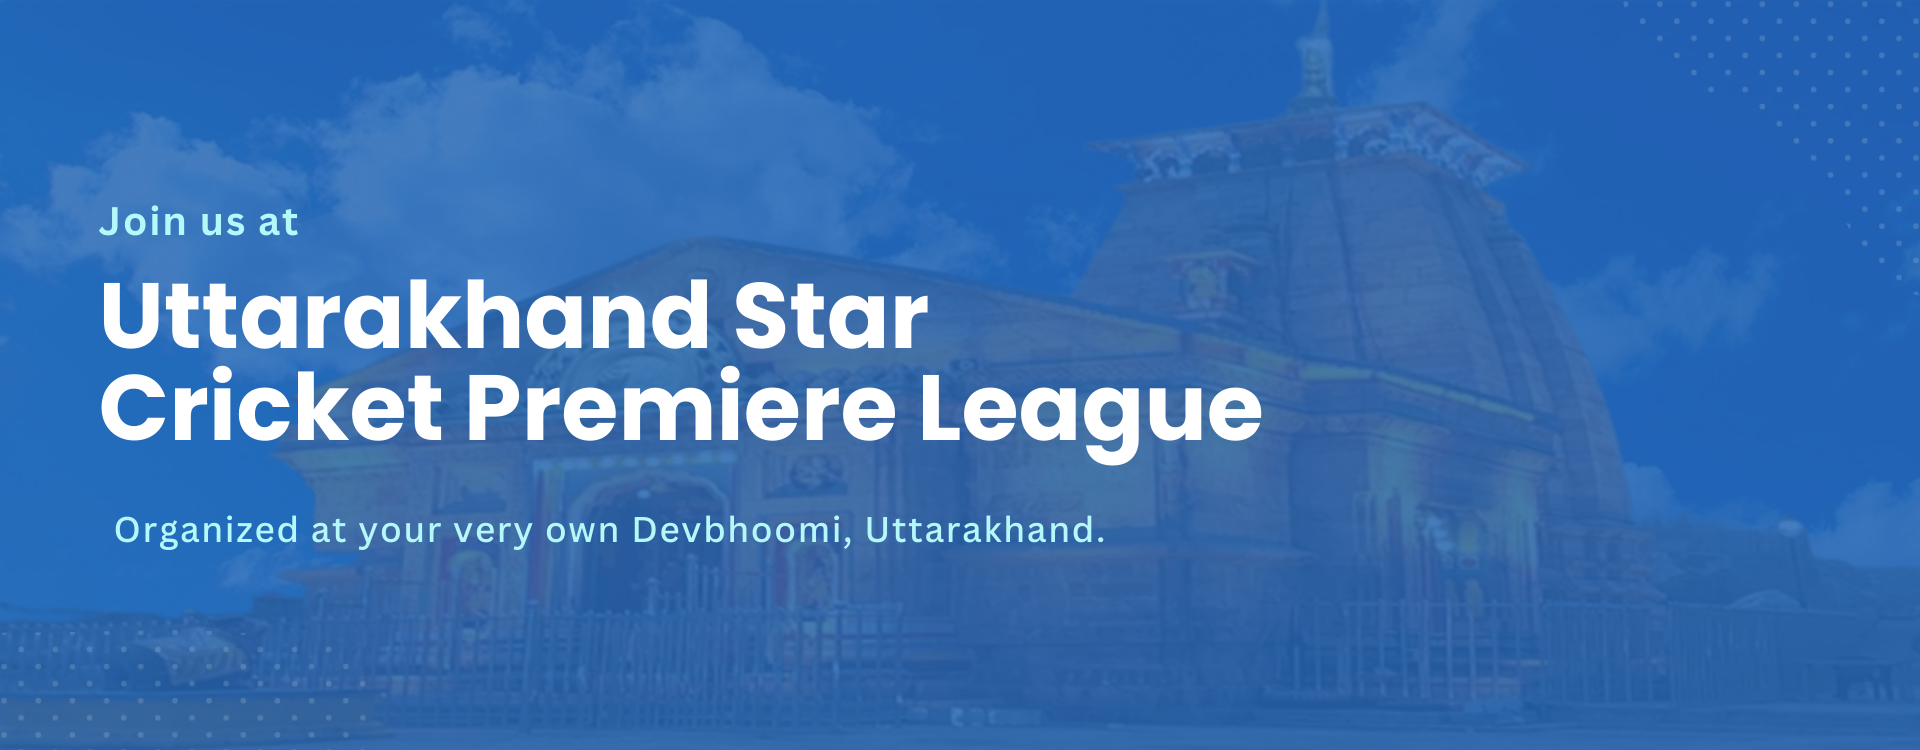 Uttarakhand Star Cricket Premiere League - Register Now